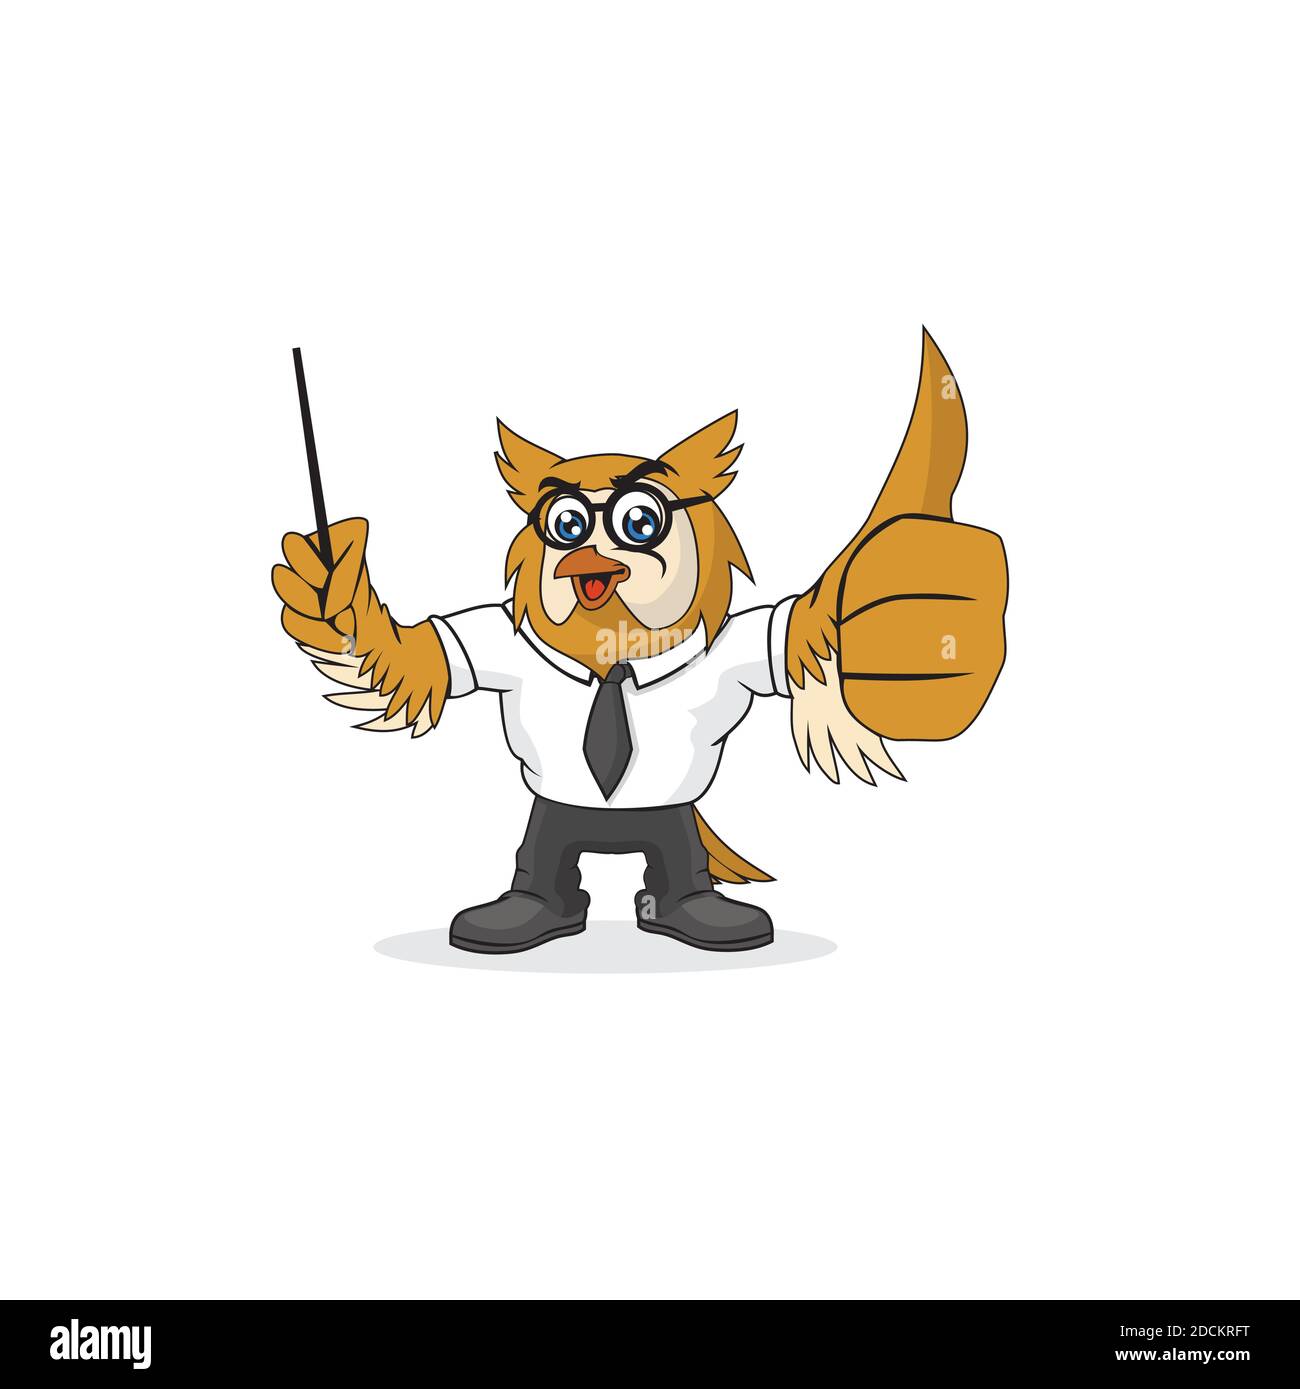 Owl teacher cartoon character design illustration vector eps format , suitable for your design needs, logo, illustration, animation, etc. Stock Vector